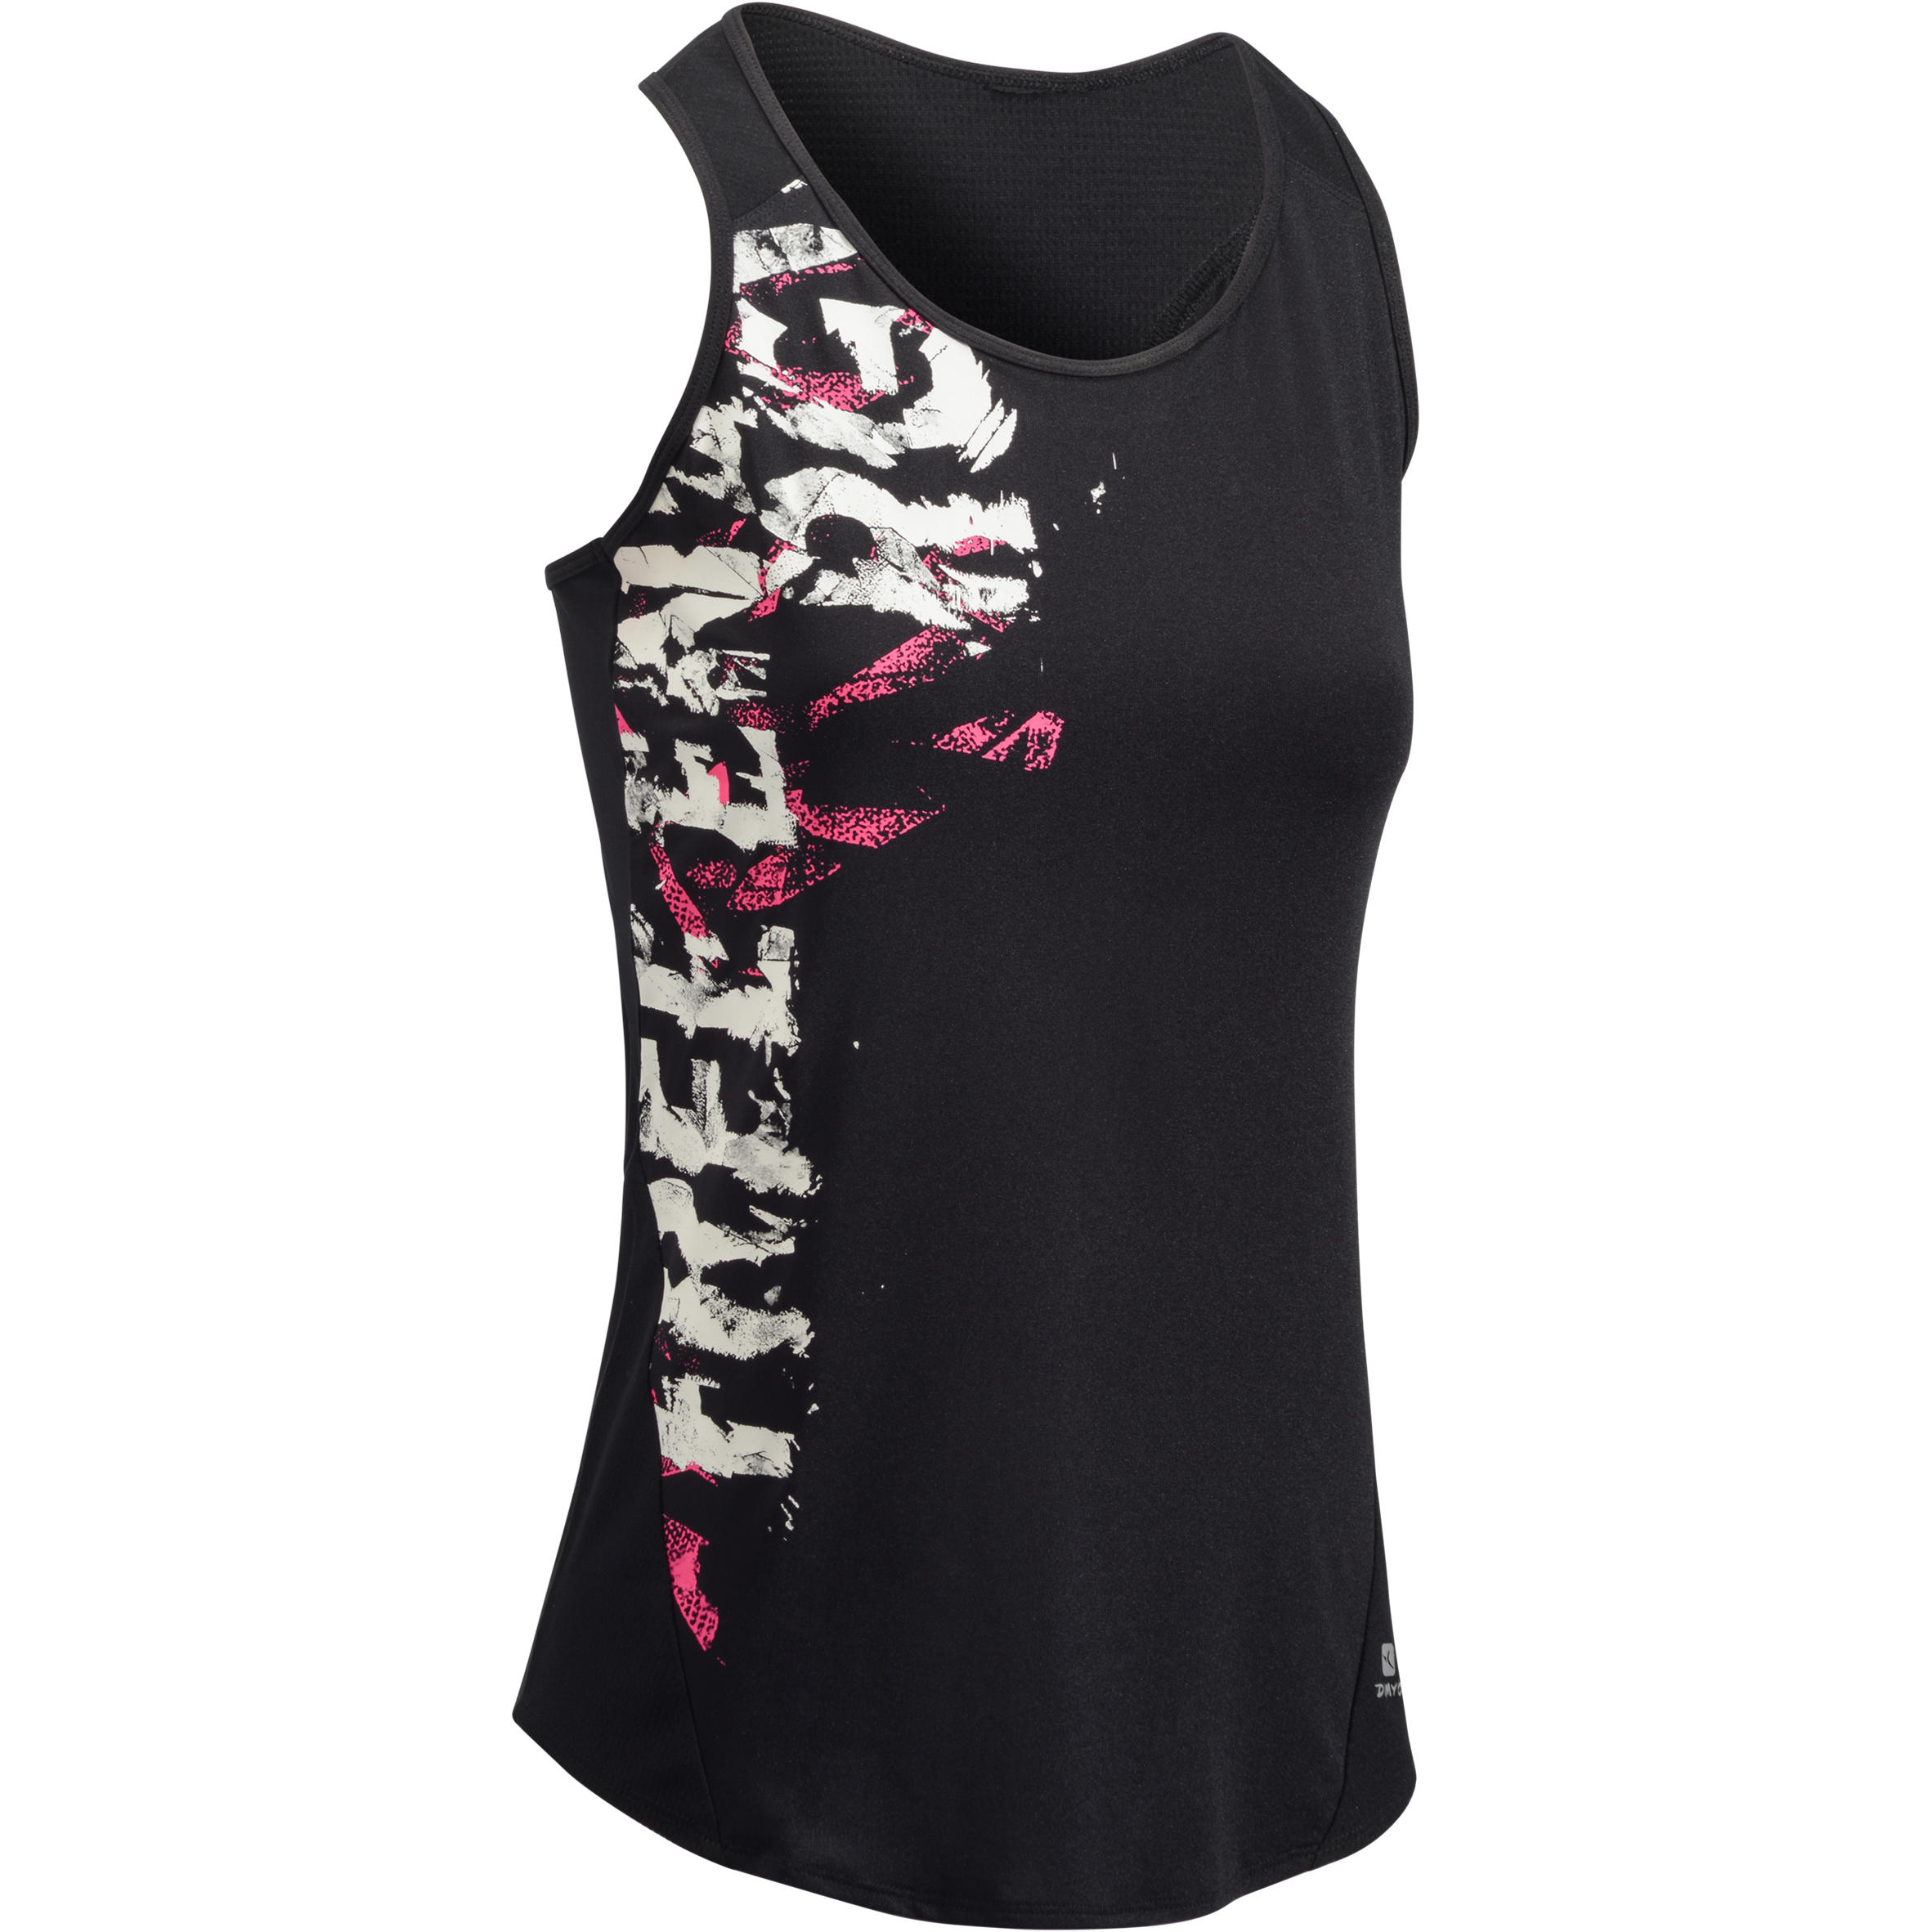 DOMYOS 120 Women's Cardio Fitness Tank Top - Black with Print